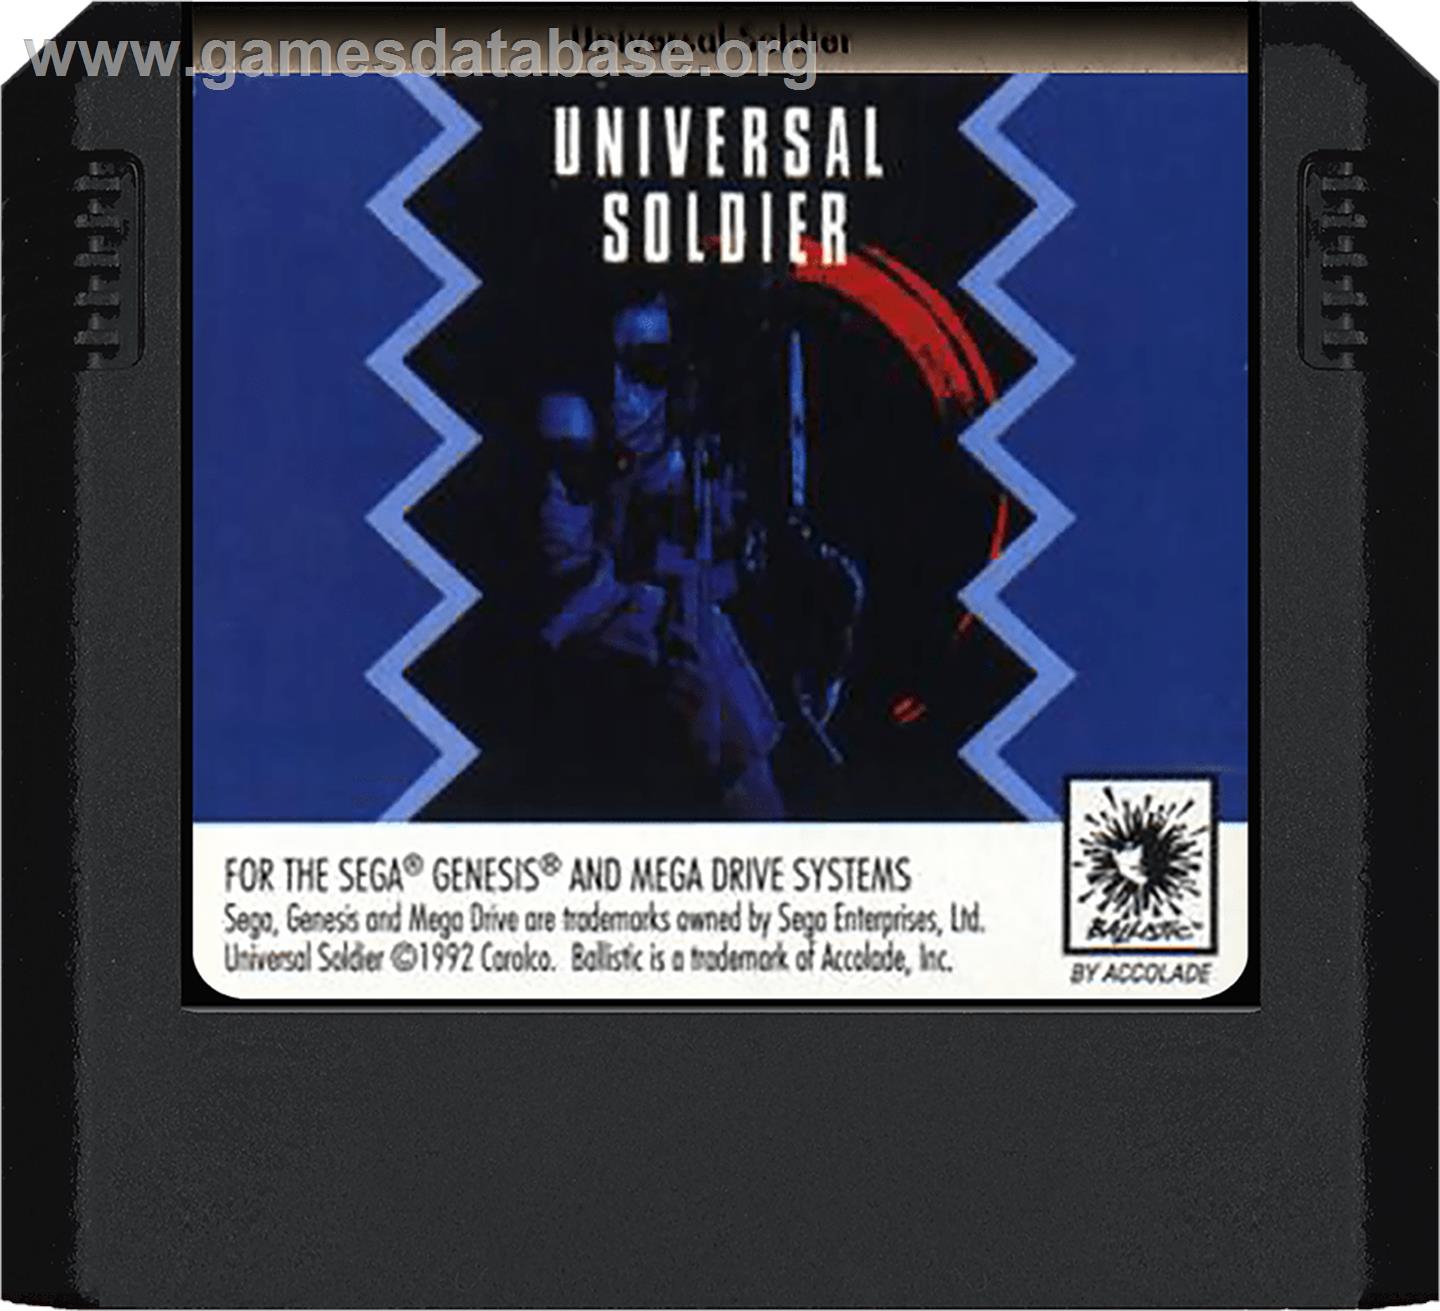 Universal Soldier - Sega Genesis - Artwork - Cartridge